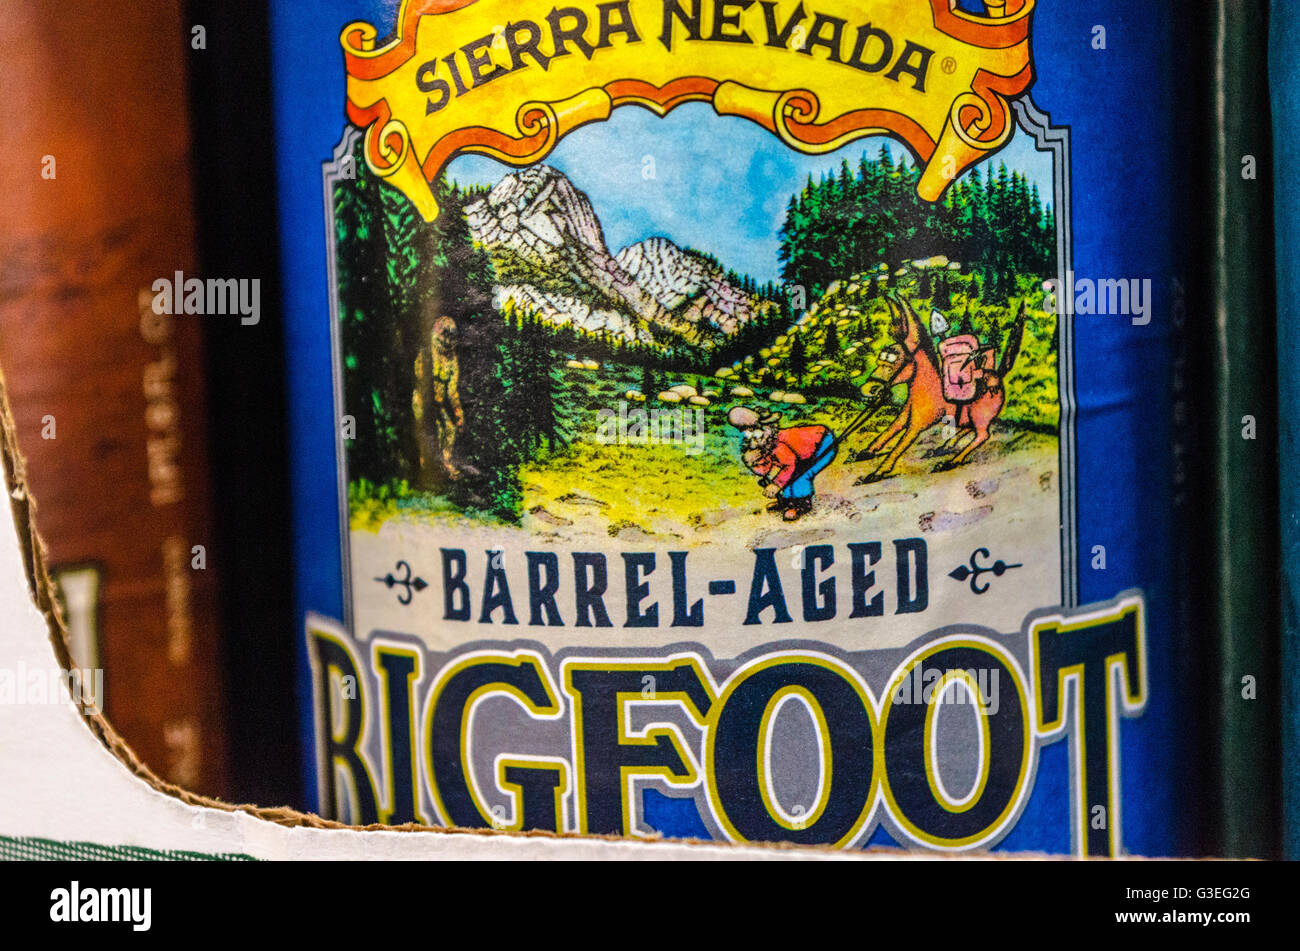 Sierra Nevada Bigfoot Ale At a Costco Store in San Leandro California Stock Photo